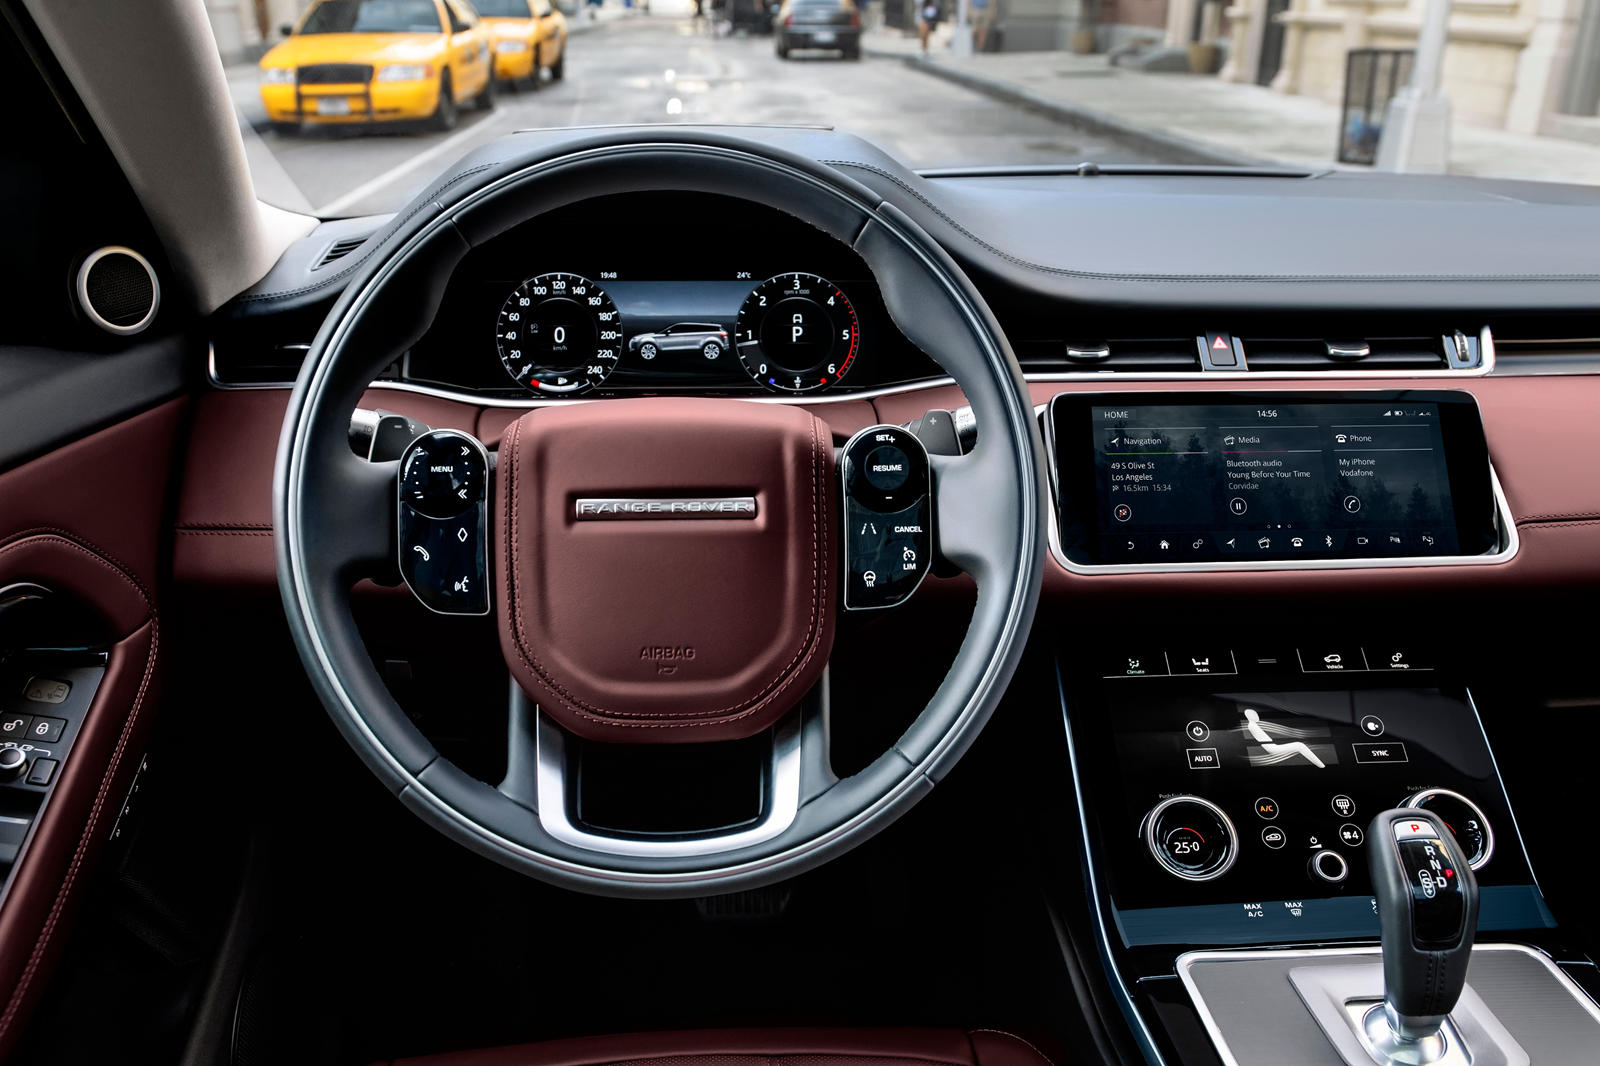 2023 Land Rover Range Rover Evoque Interior Dimensions: Seating